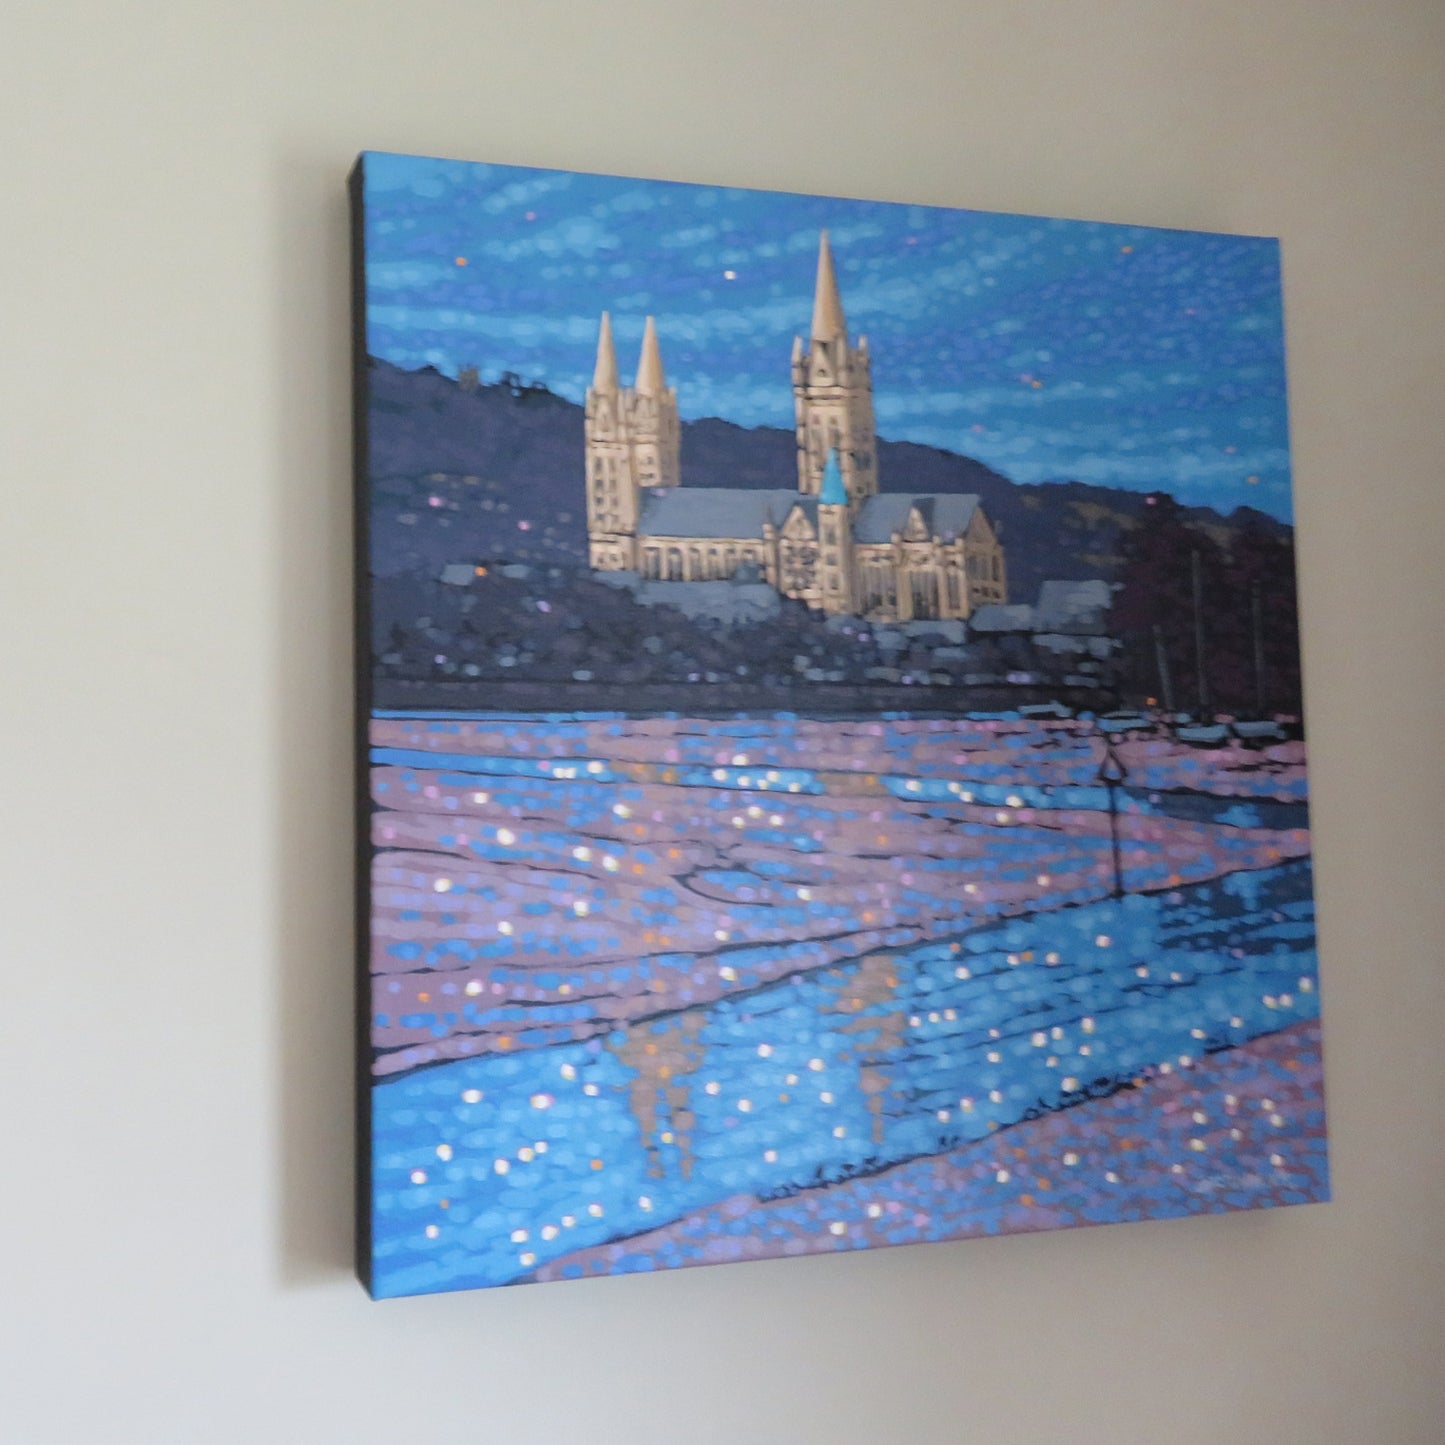 SA013. Truro Cathedral sunshine - Original painting